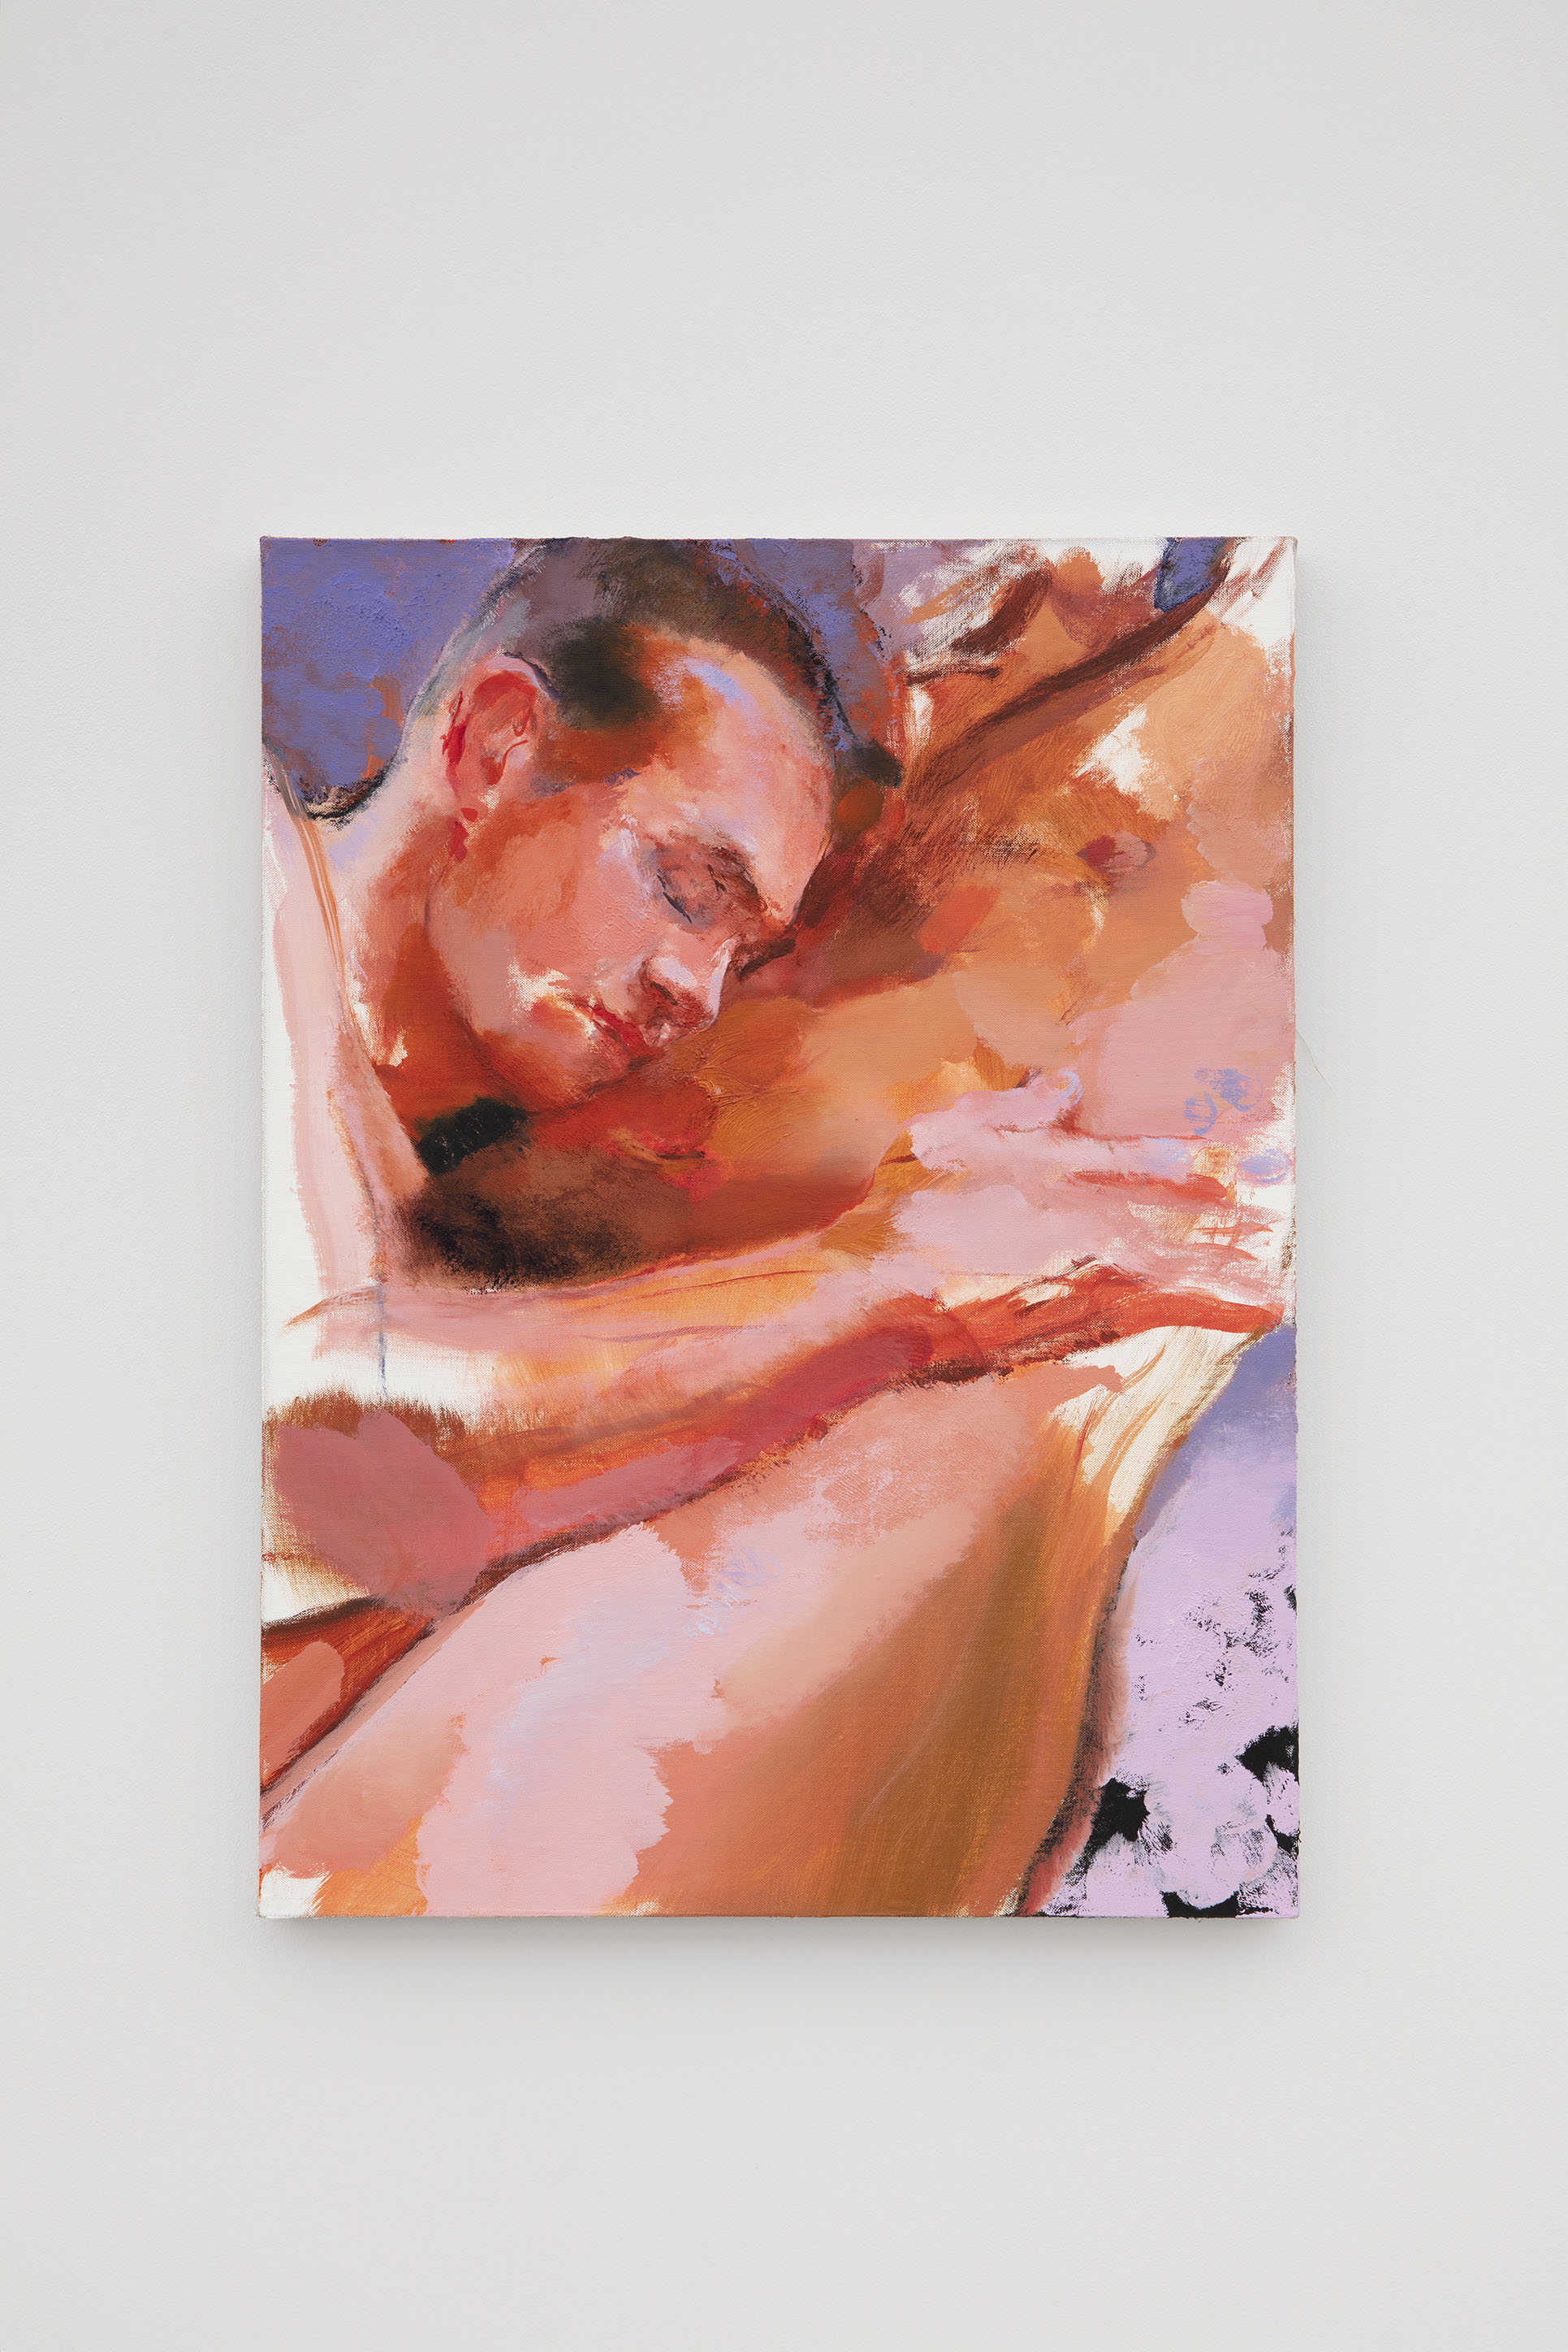 Doron Langberg. "Zach and Craig #4", 2019. Oil on linen - 61 x 46 cm 